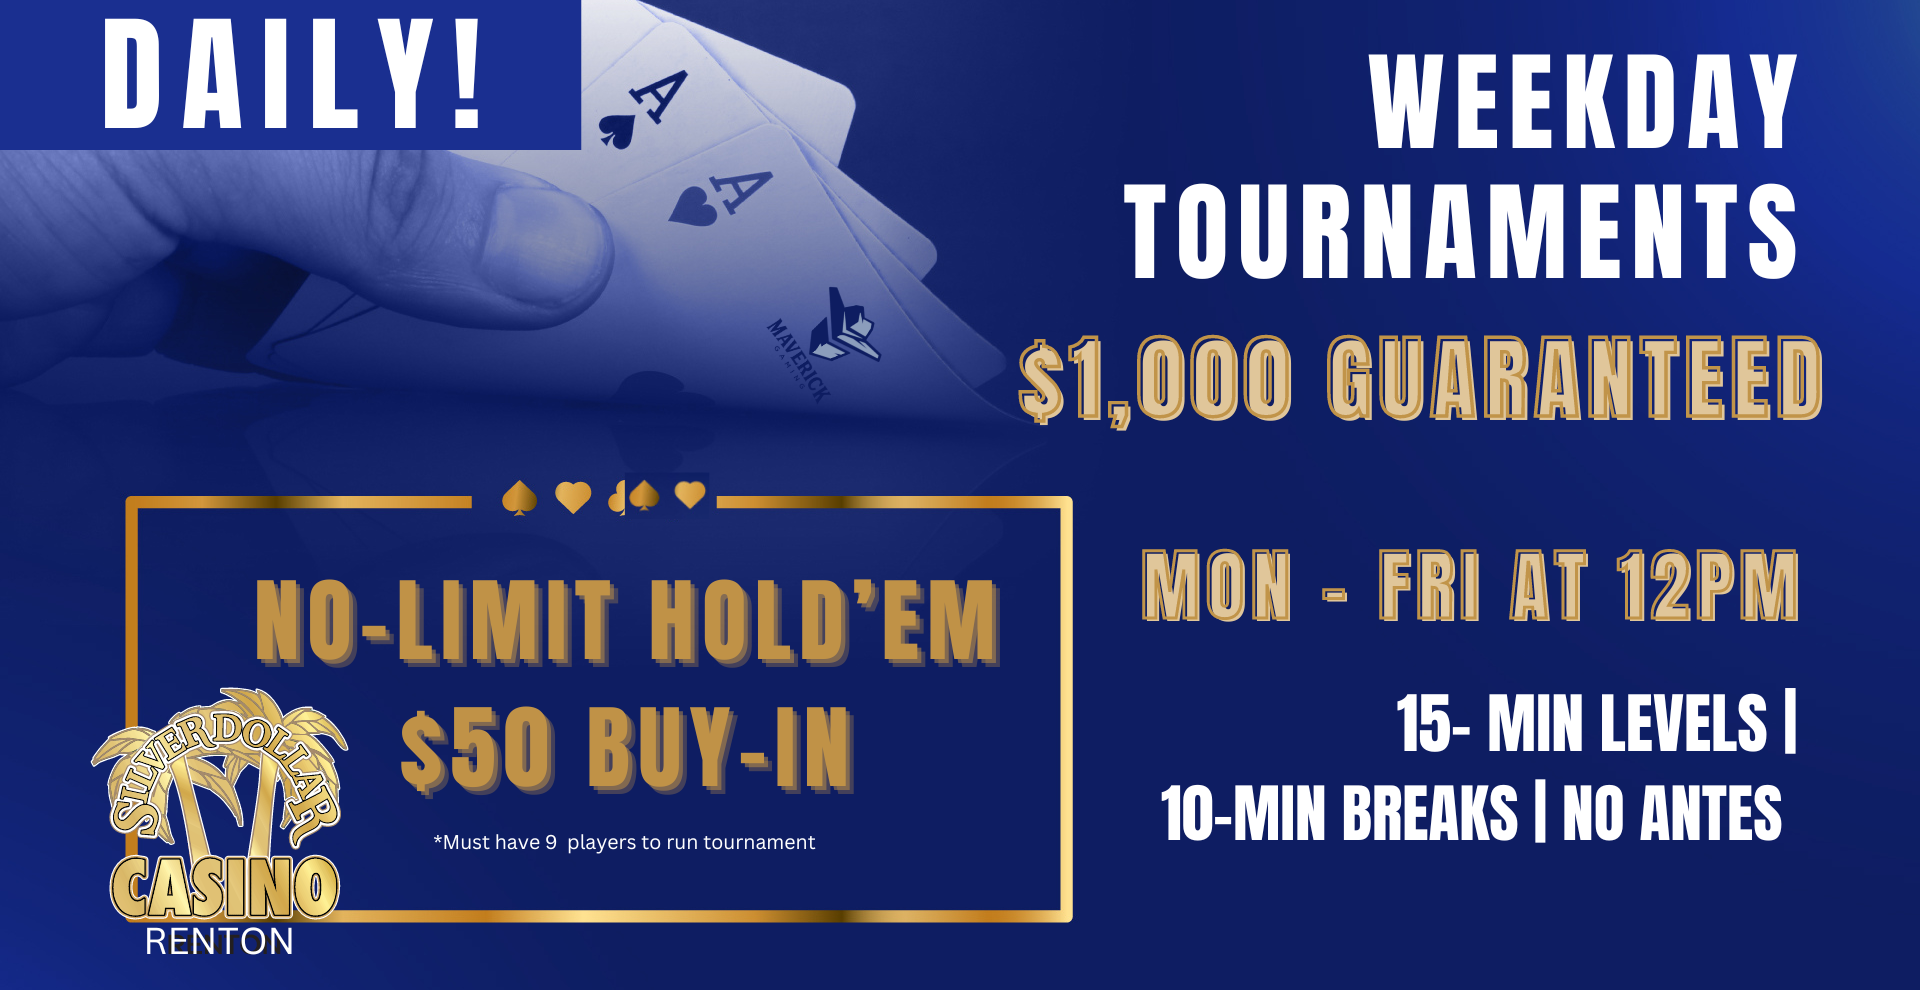 Silver Dollar Casino Renton | Weekday Poker Tournaments